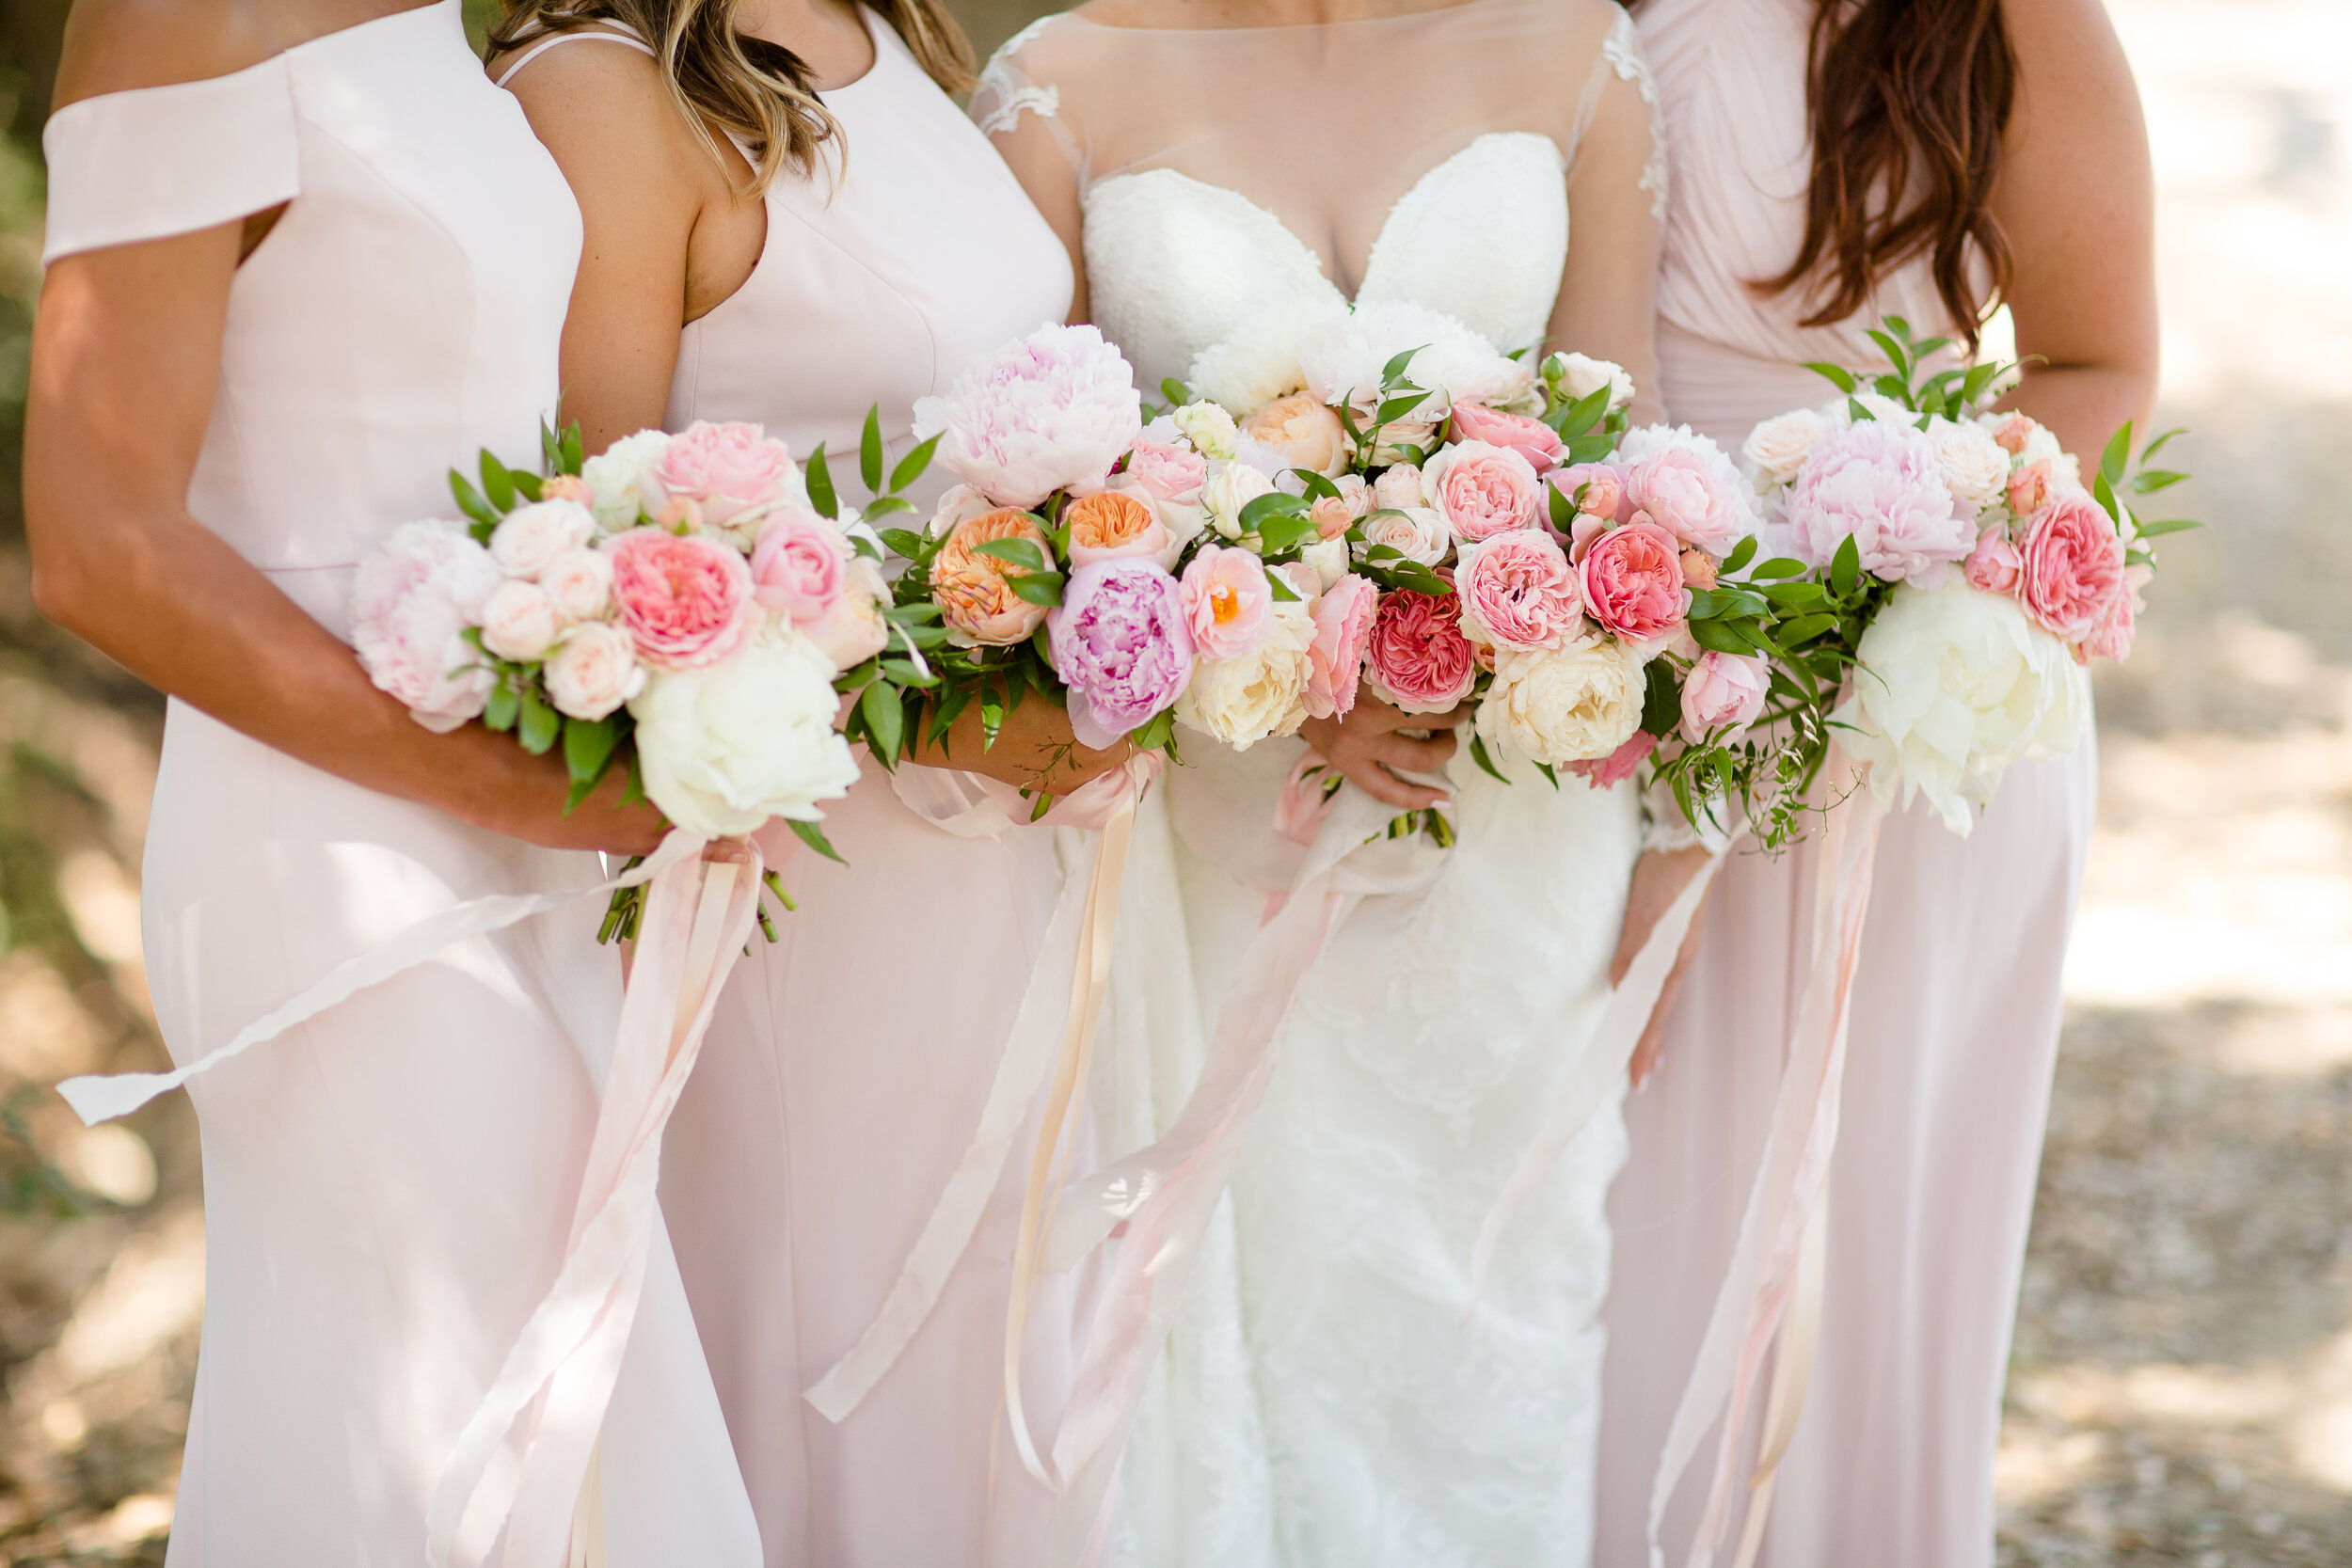 3 blush bridesmaids bouquets.jpg